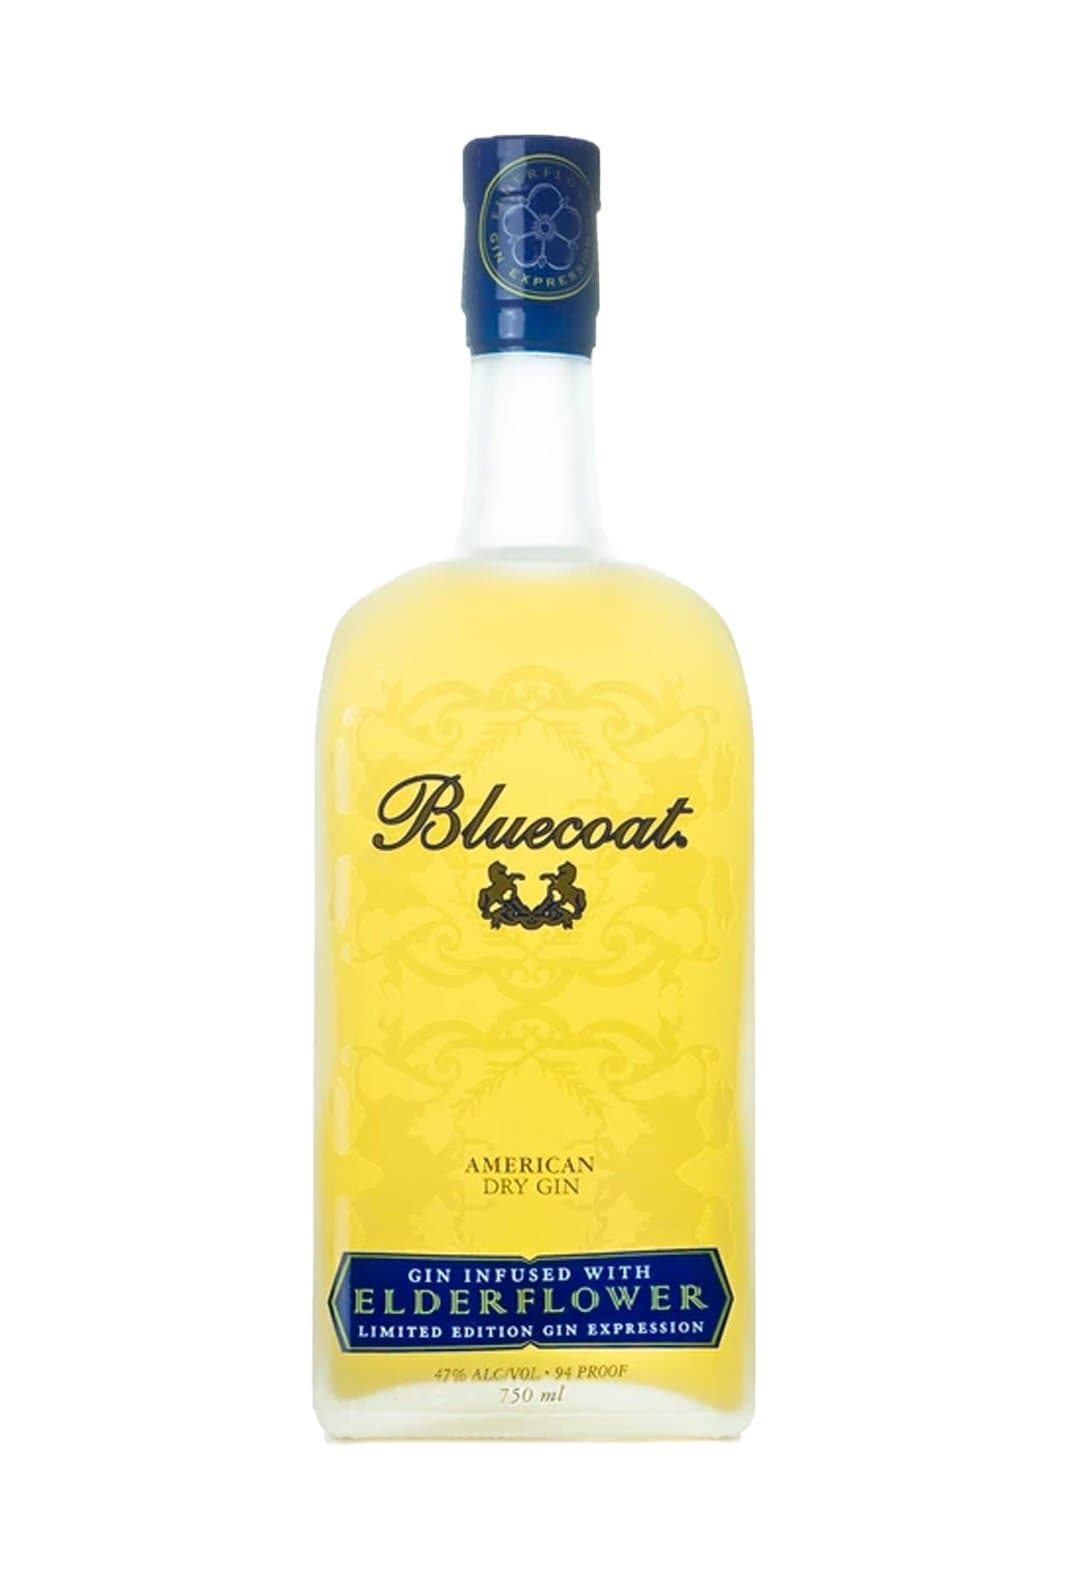 Bluecoat American Elderflower Gin 47% 700ml | Gin | Shop online at Spirits of France